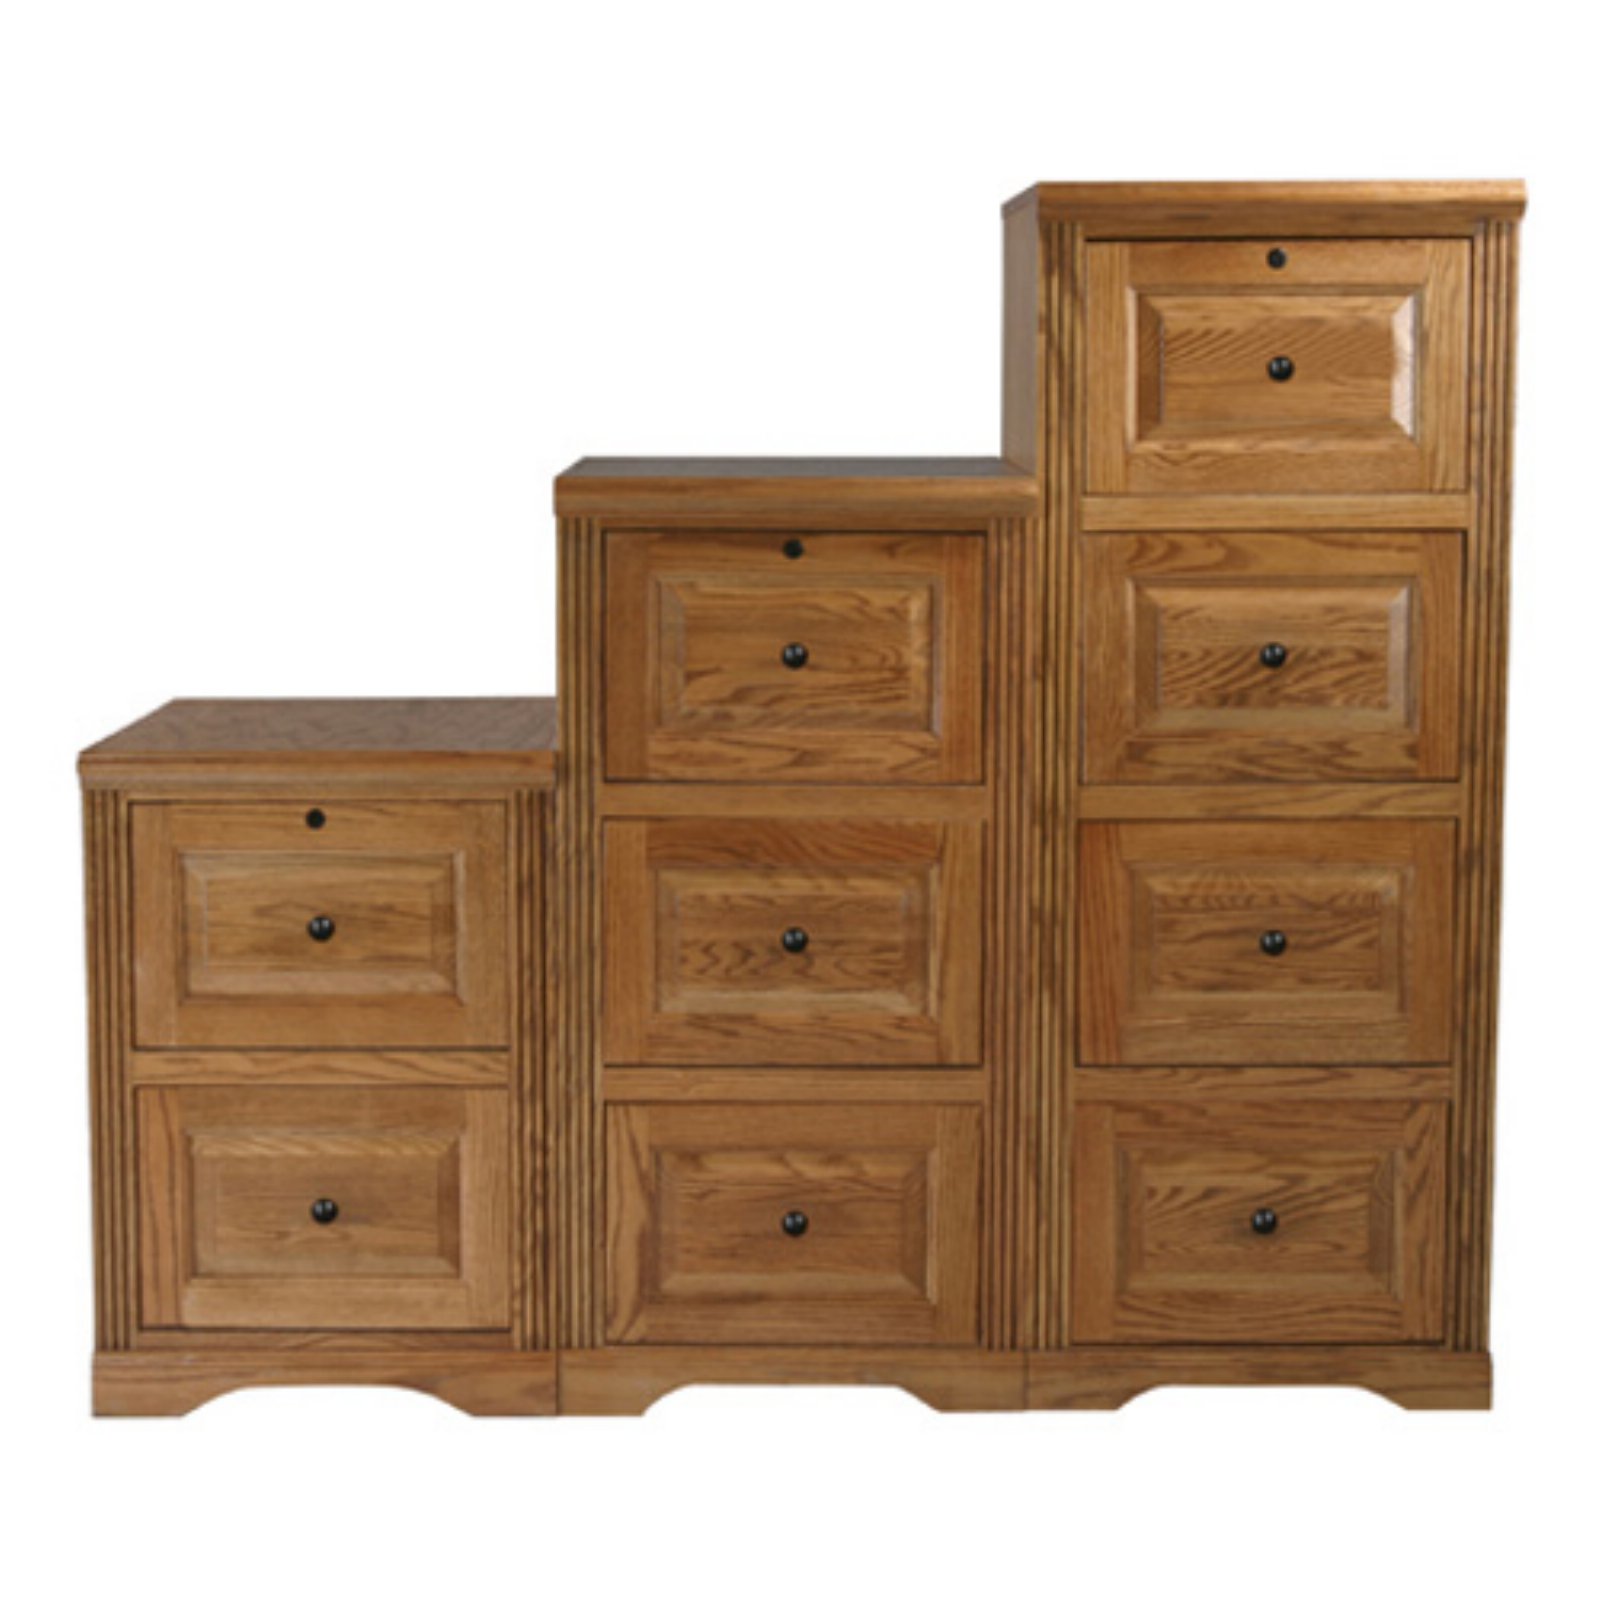 Eagle Furniture Oak Ridge Customizable File Cabinet - image 1 of 1